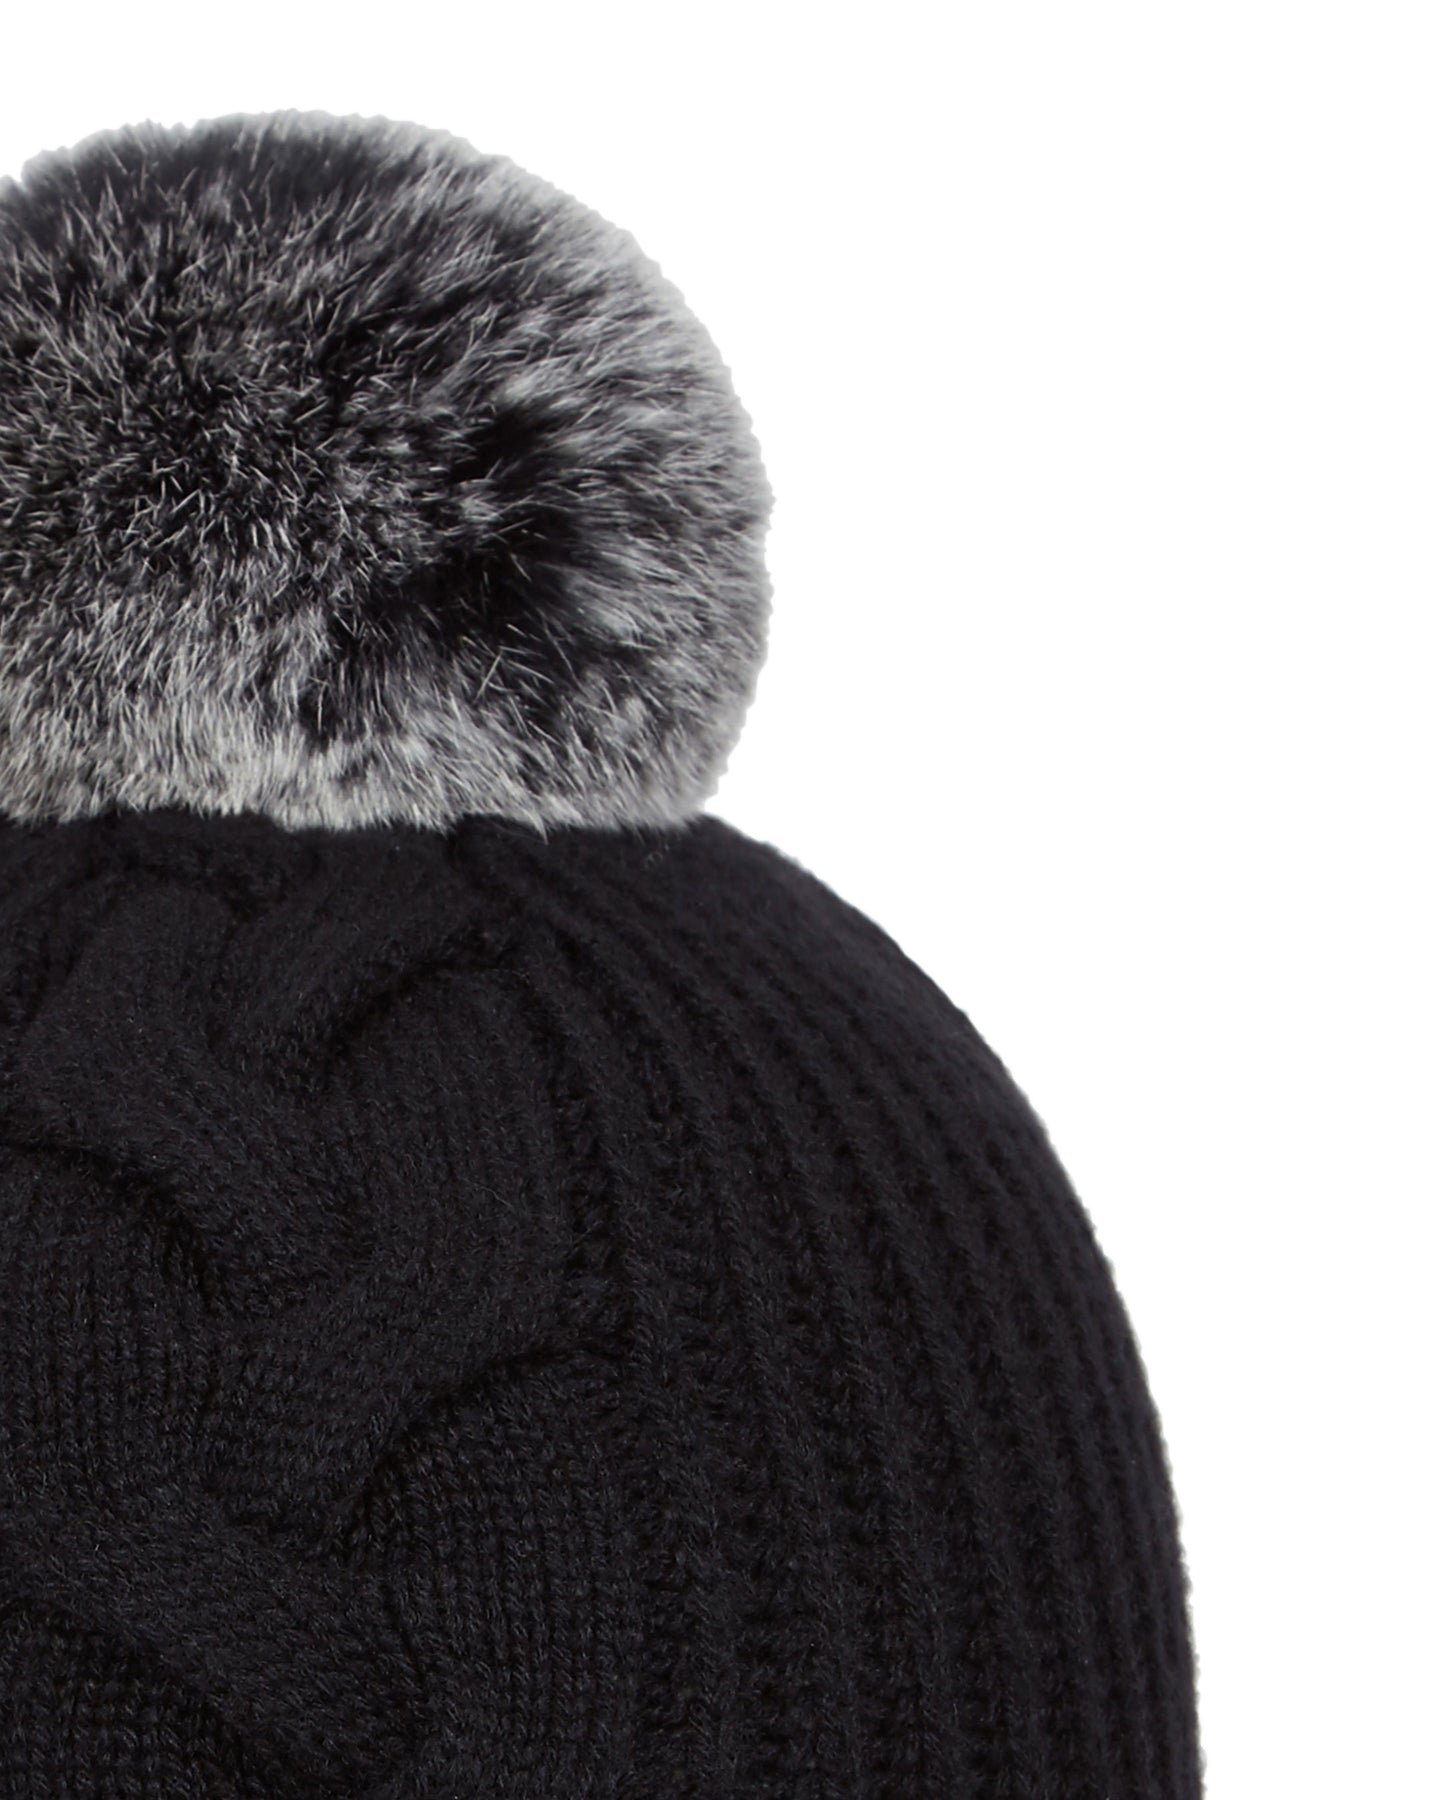 N.Peal Women's Fur Bobble Cable Hat Black